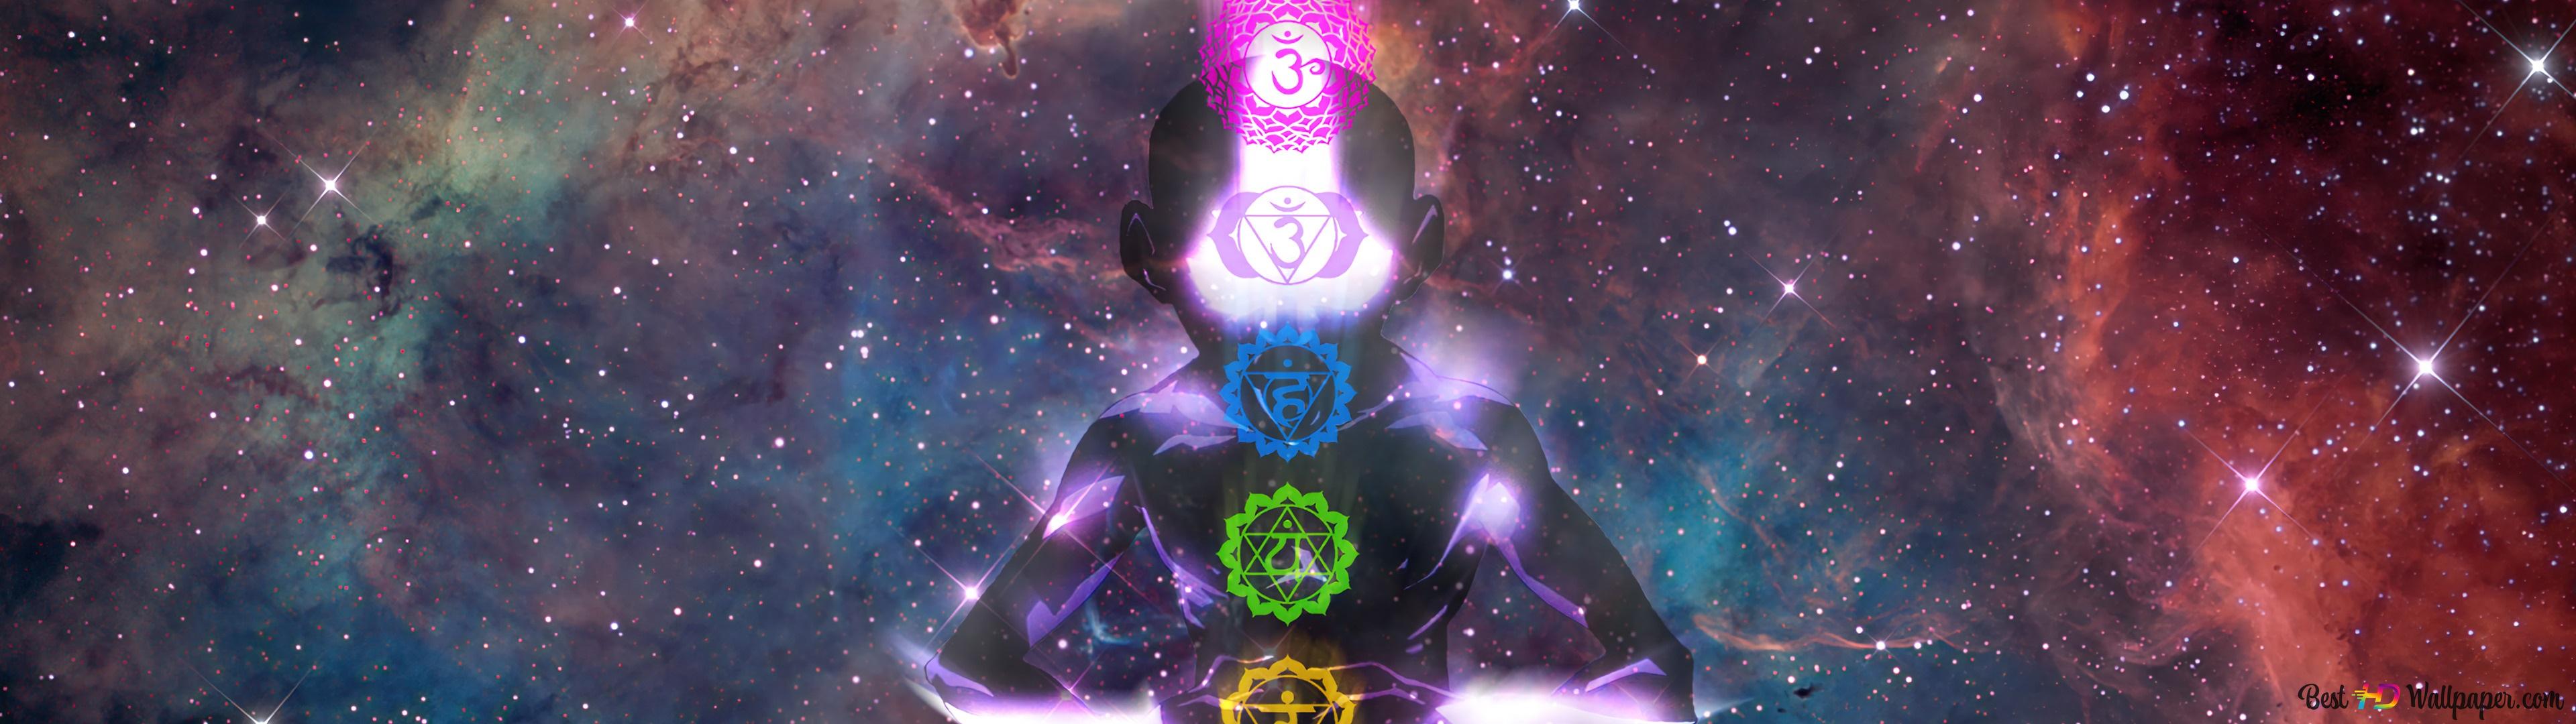  Chakra Hintergrundbild 3840x1080. Avatar : The Last Airbender : Aang 7 Awakened Chakras 4K wallpaper download